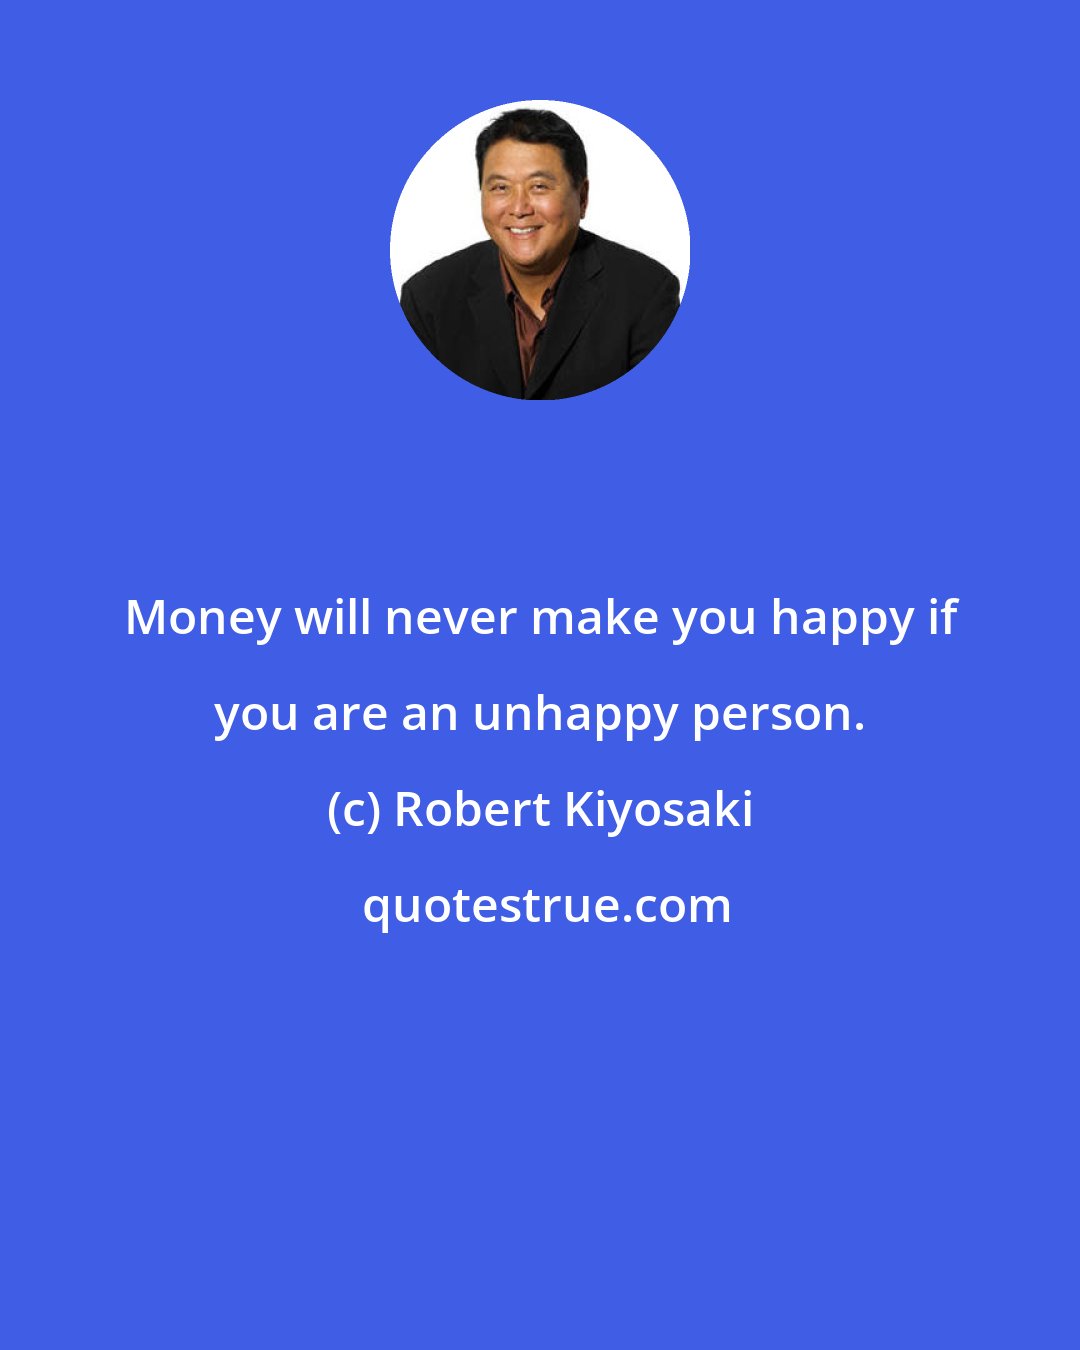 Robert Kiyosaki: Money will never make you happy if you are an unhappy person.